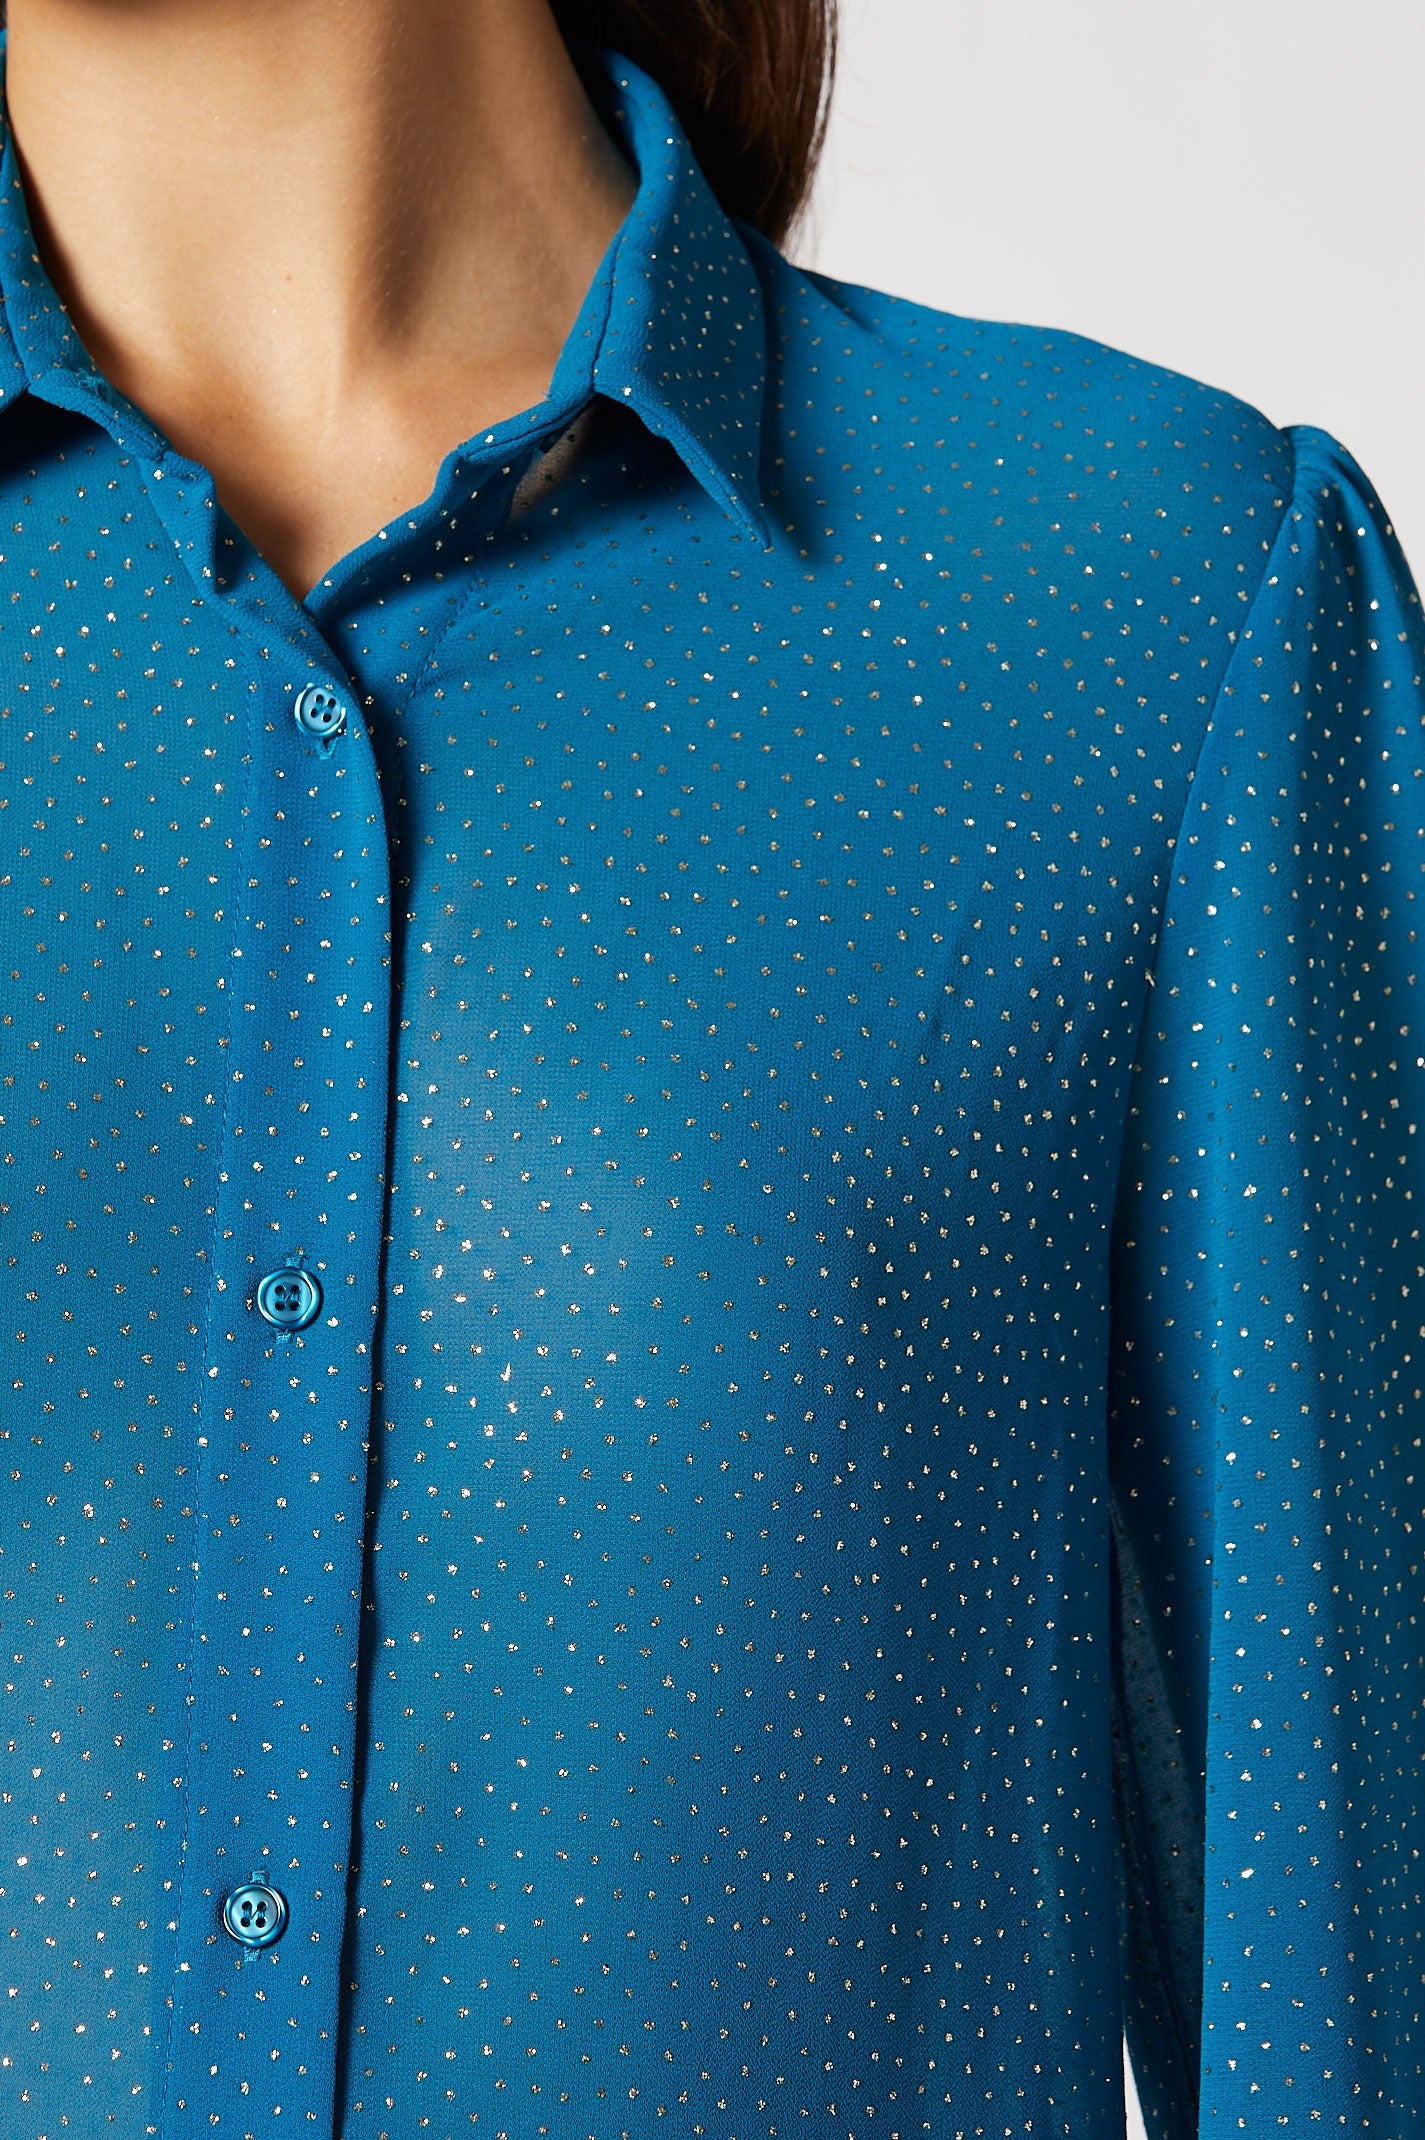 Sparkle Shirt Turquoise - Scanlan Theodore US